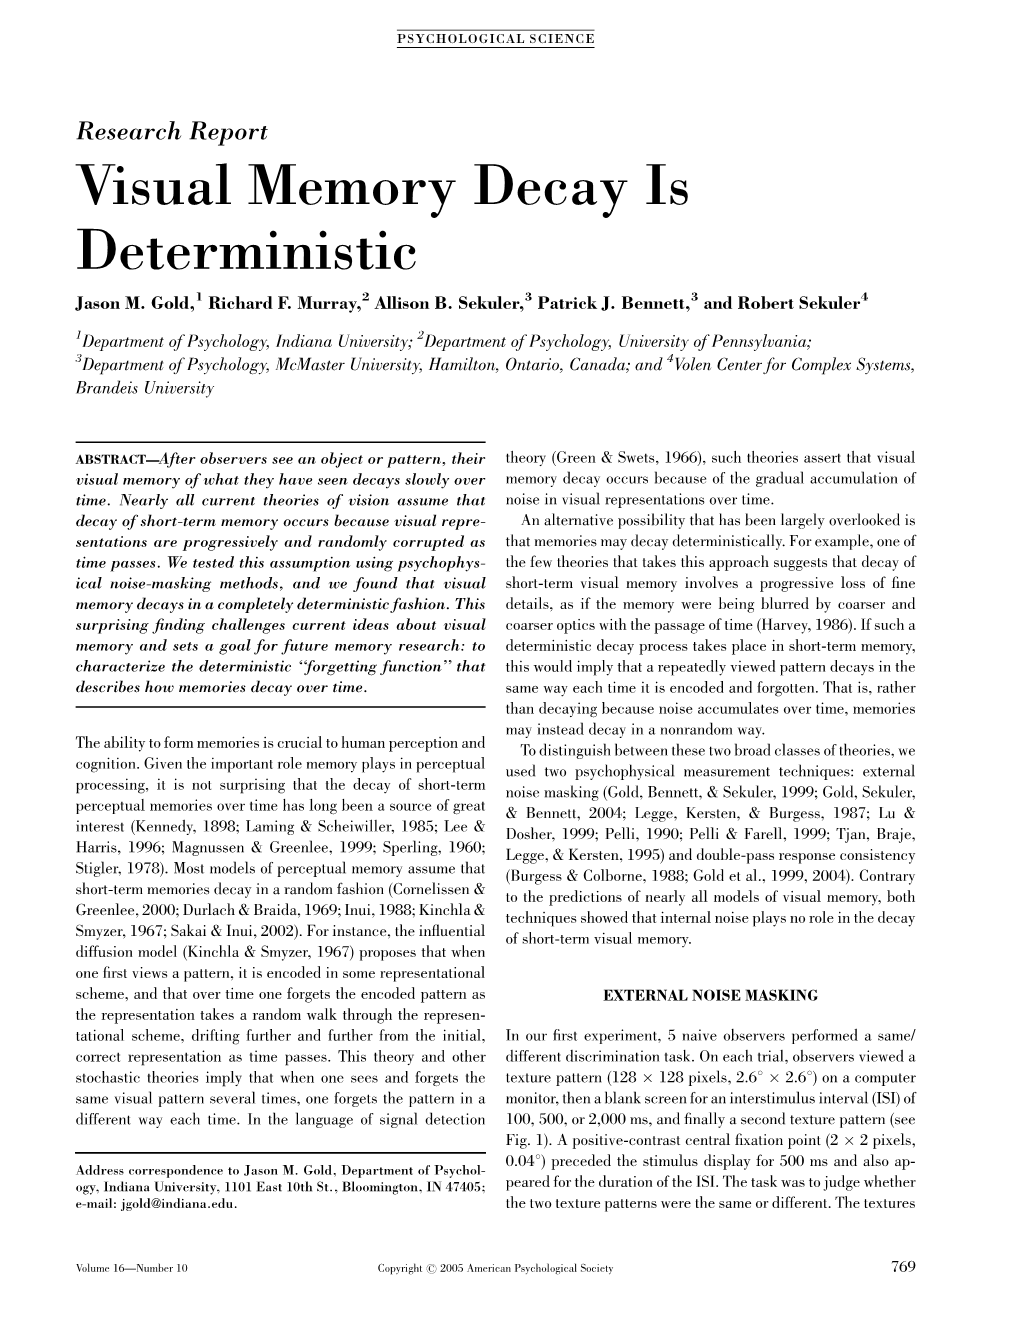 Visual Memory Decay Is Deterministic Jason M